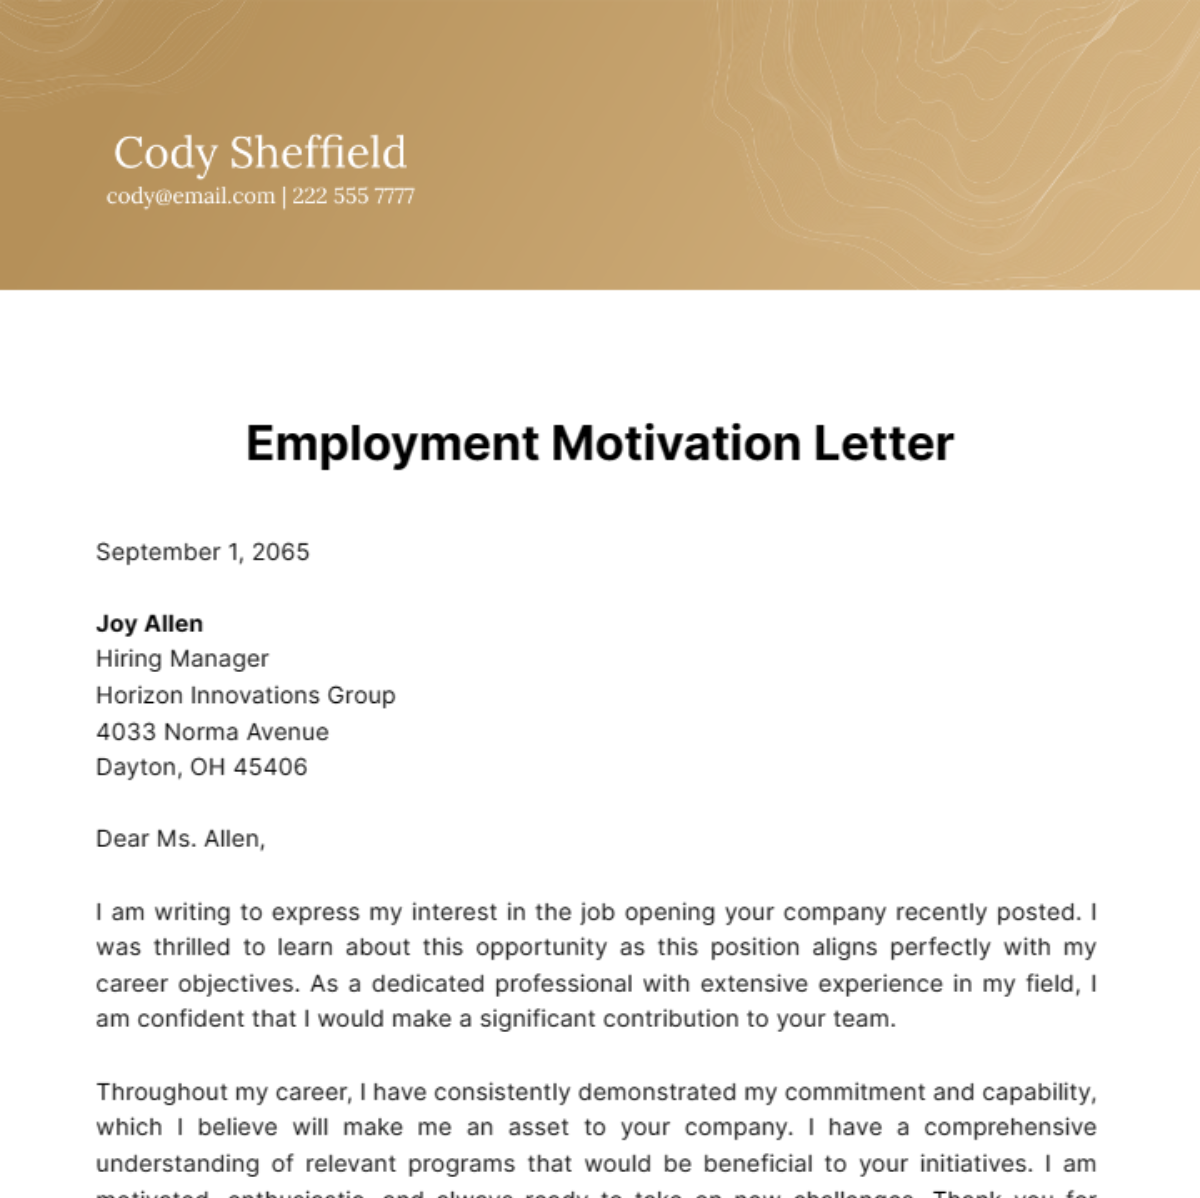 Employment Motivation Letter Template